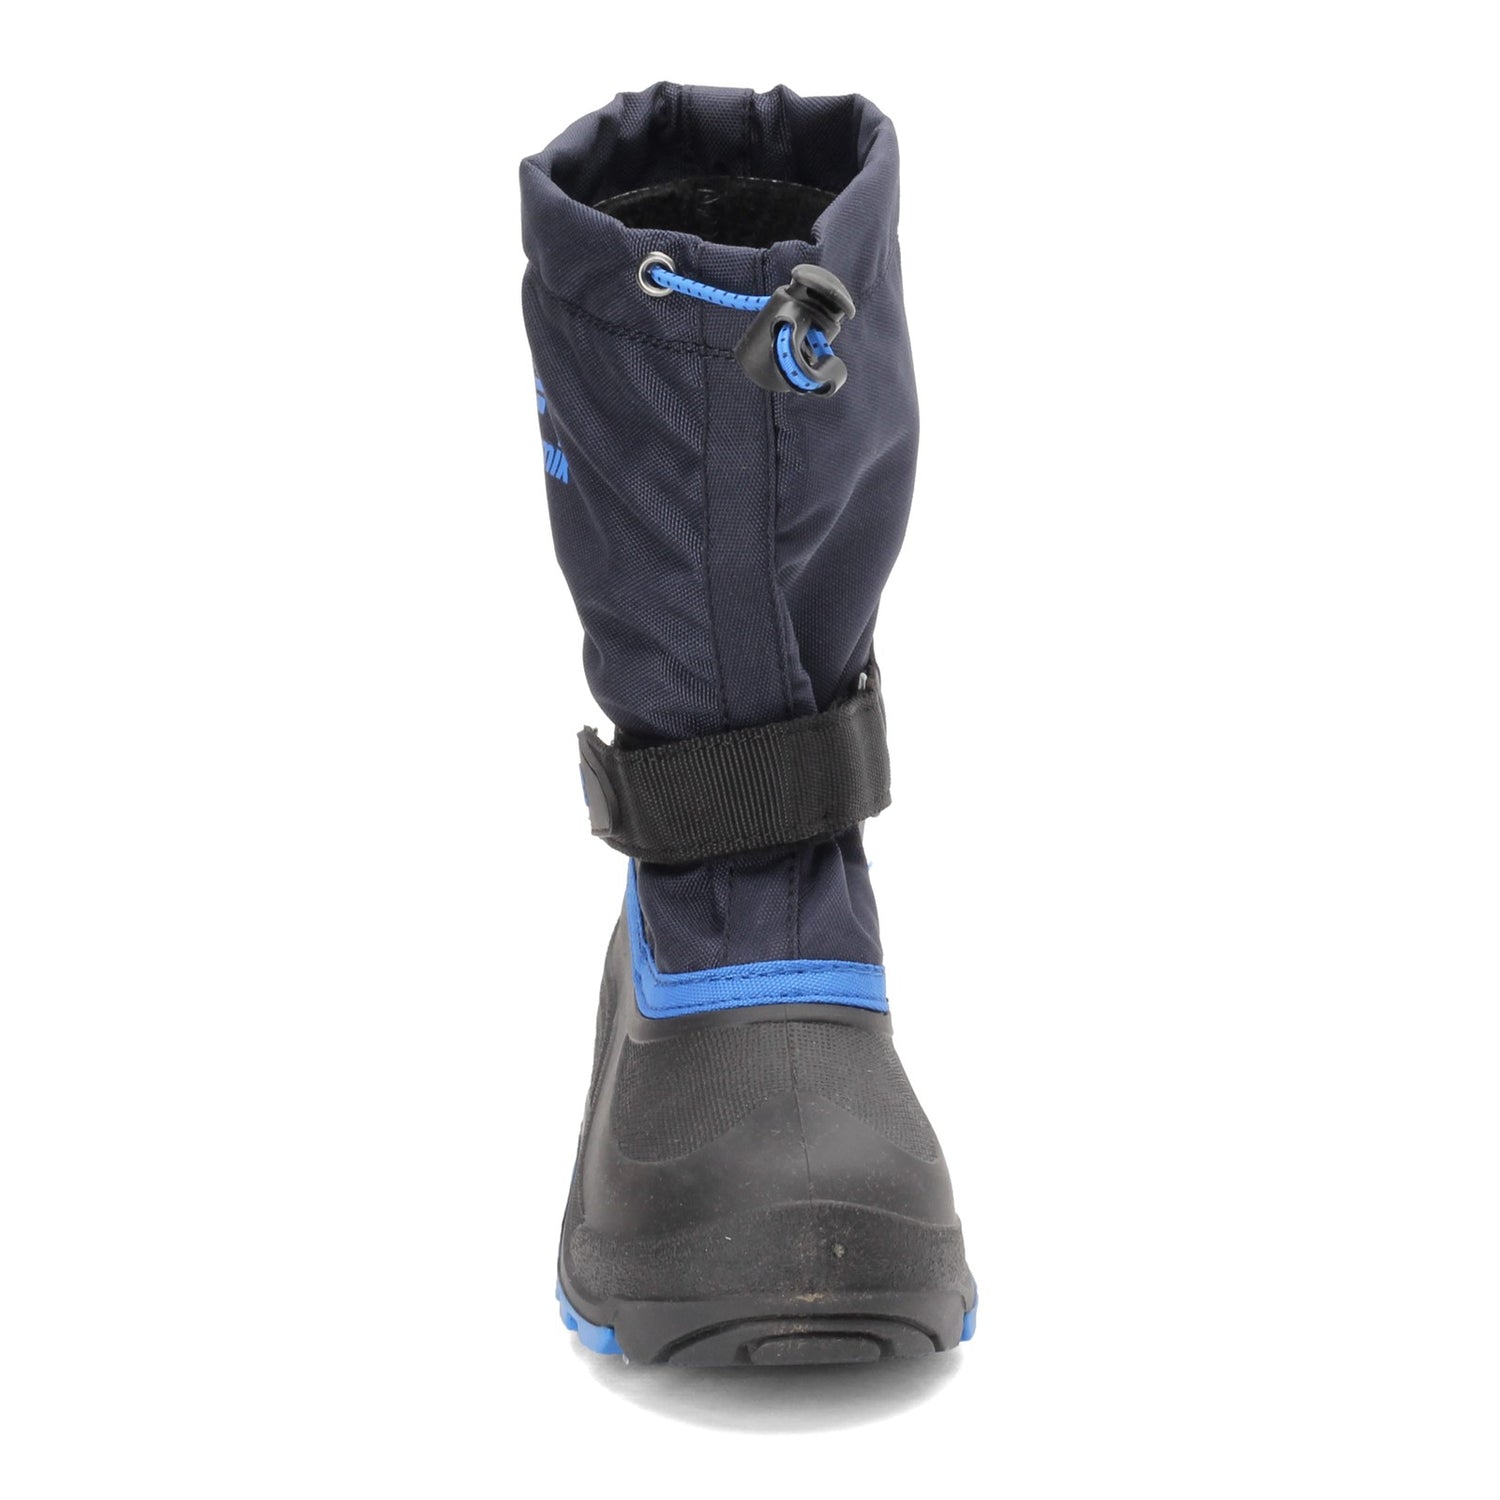 Peltz Shoes  Boy's Kamik Waterbug Boot - Wide Width - Toddler & Little Kid NAVY / BLUE NK8227-NBL